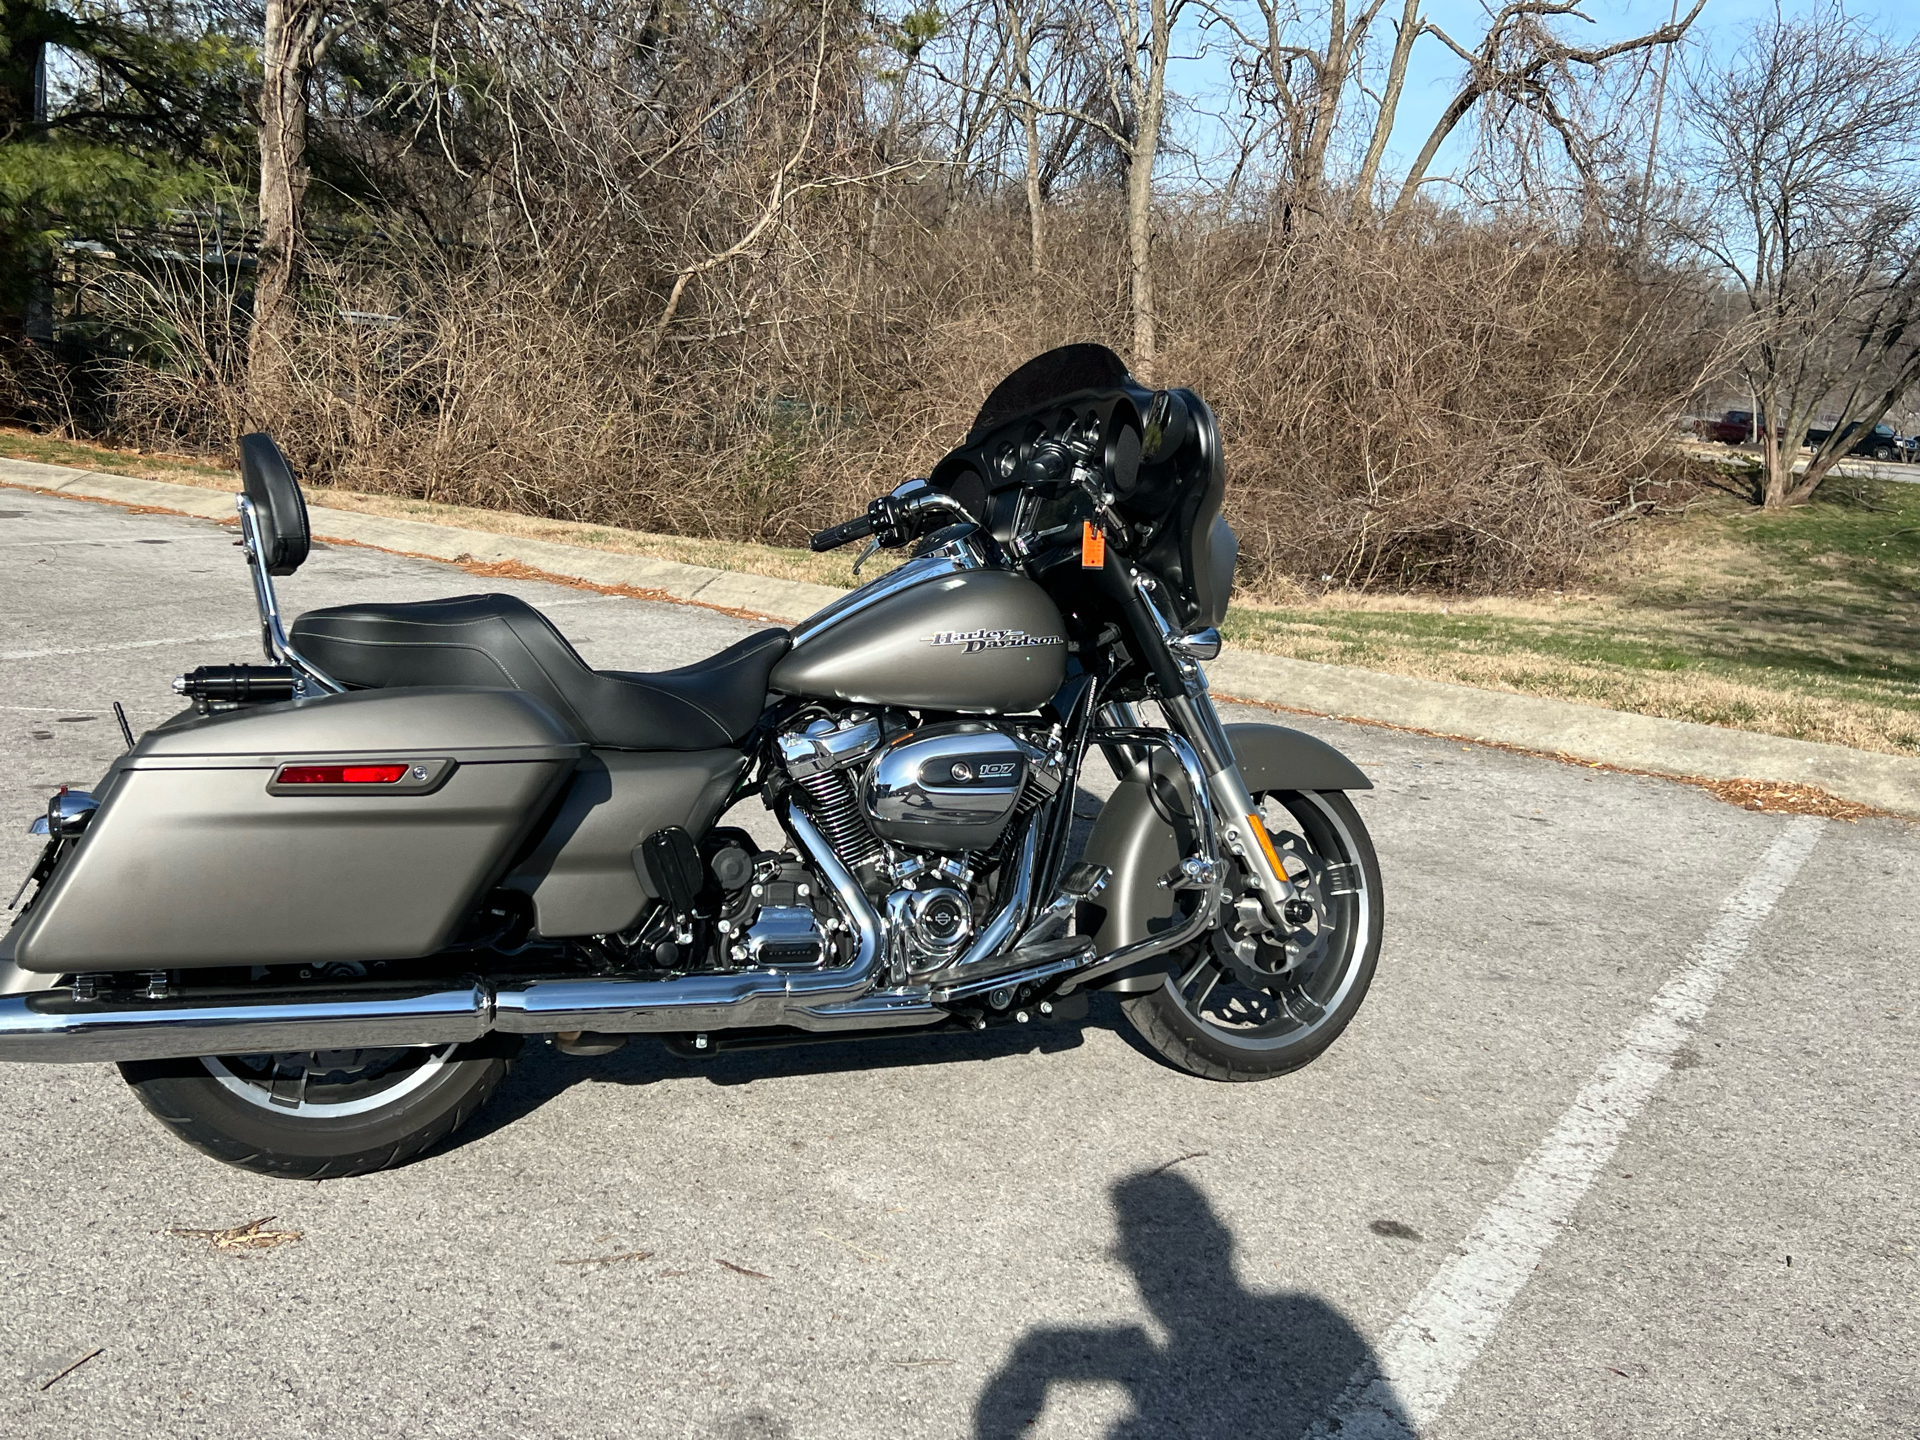 2018 Harley-Davidson Street Glide® in Franklin, Tennessee - Photo 8